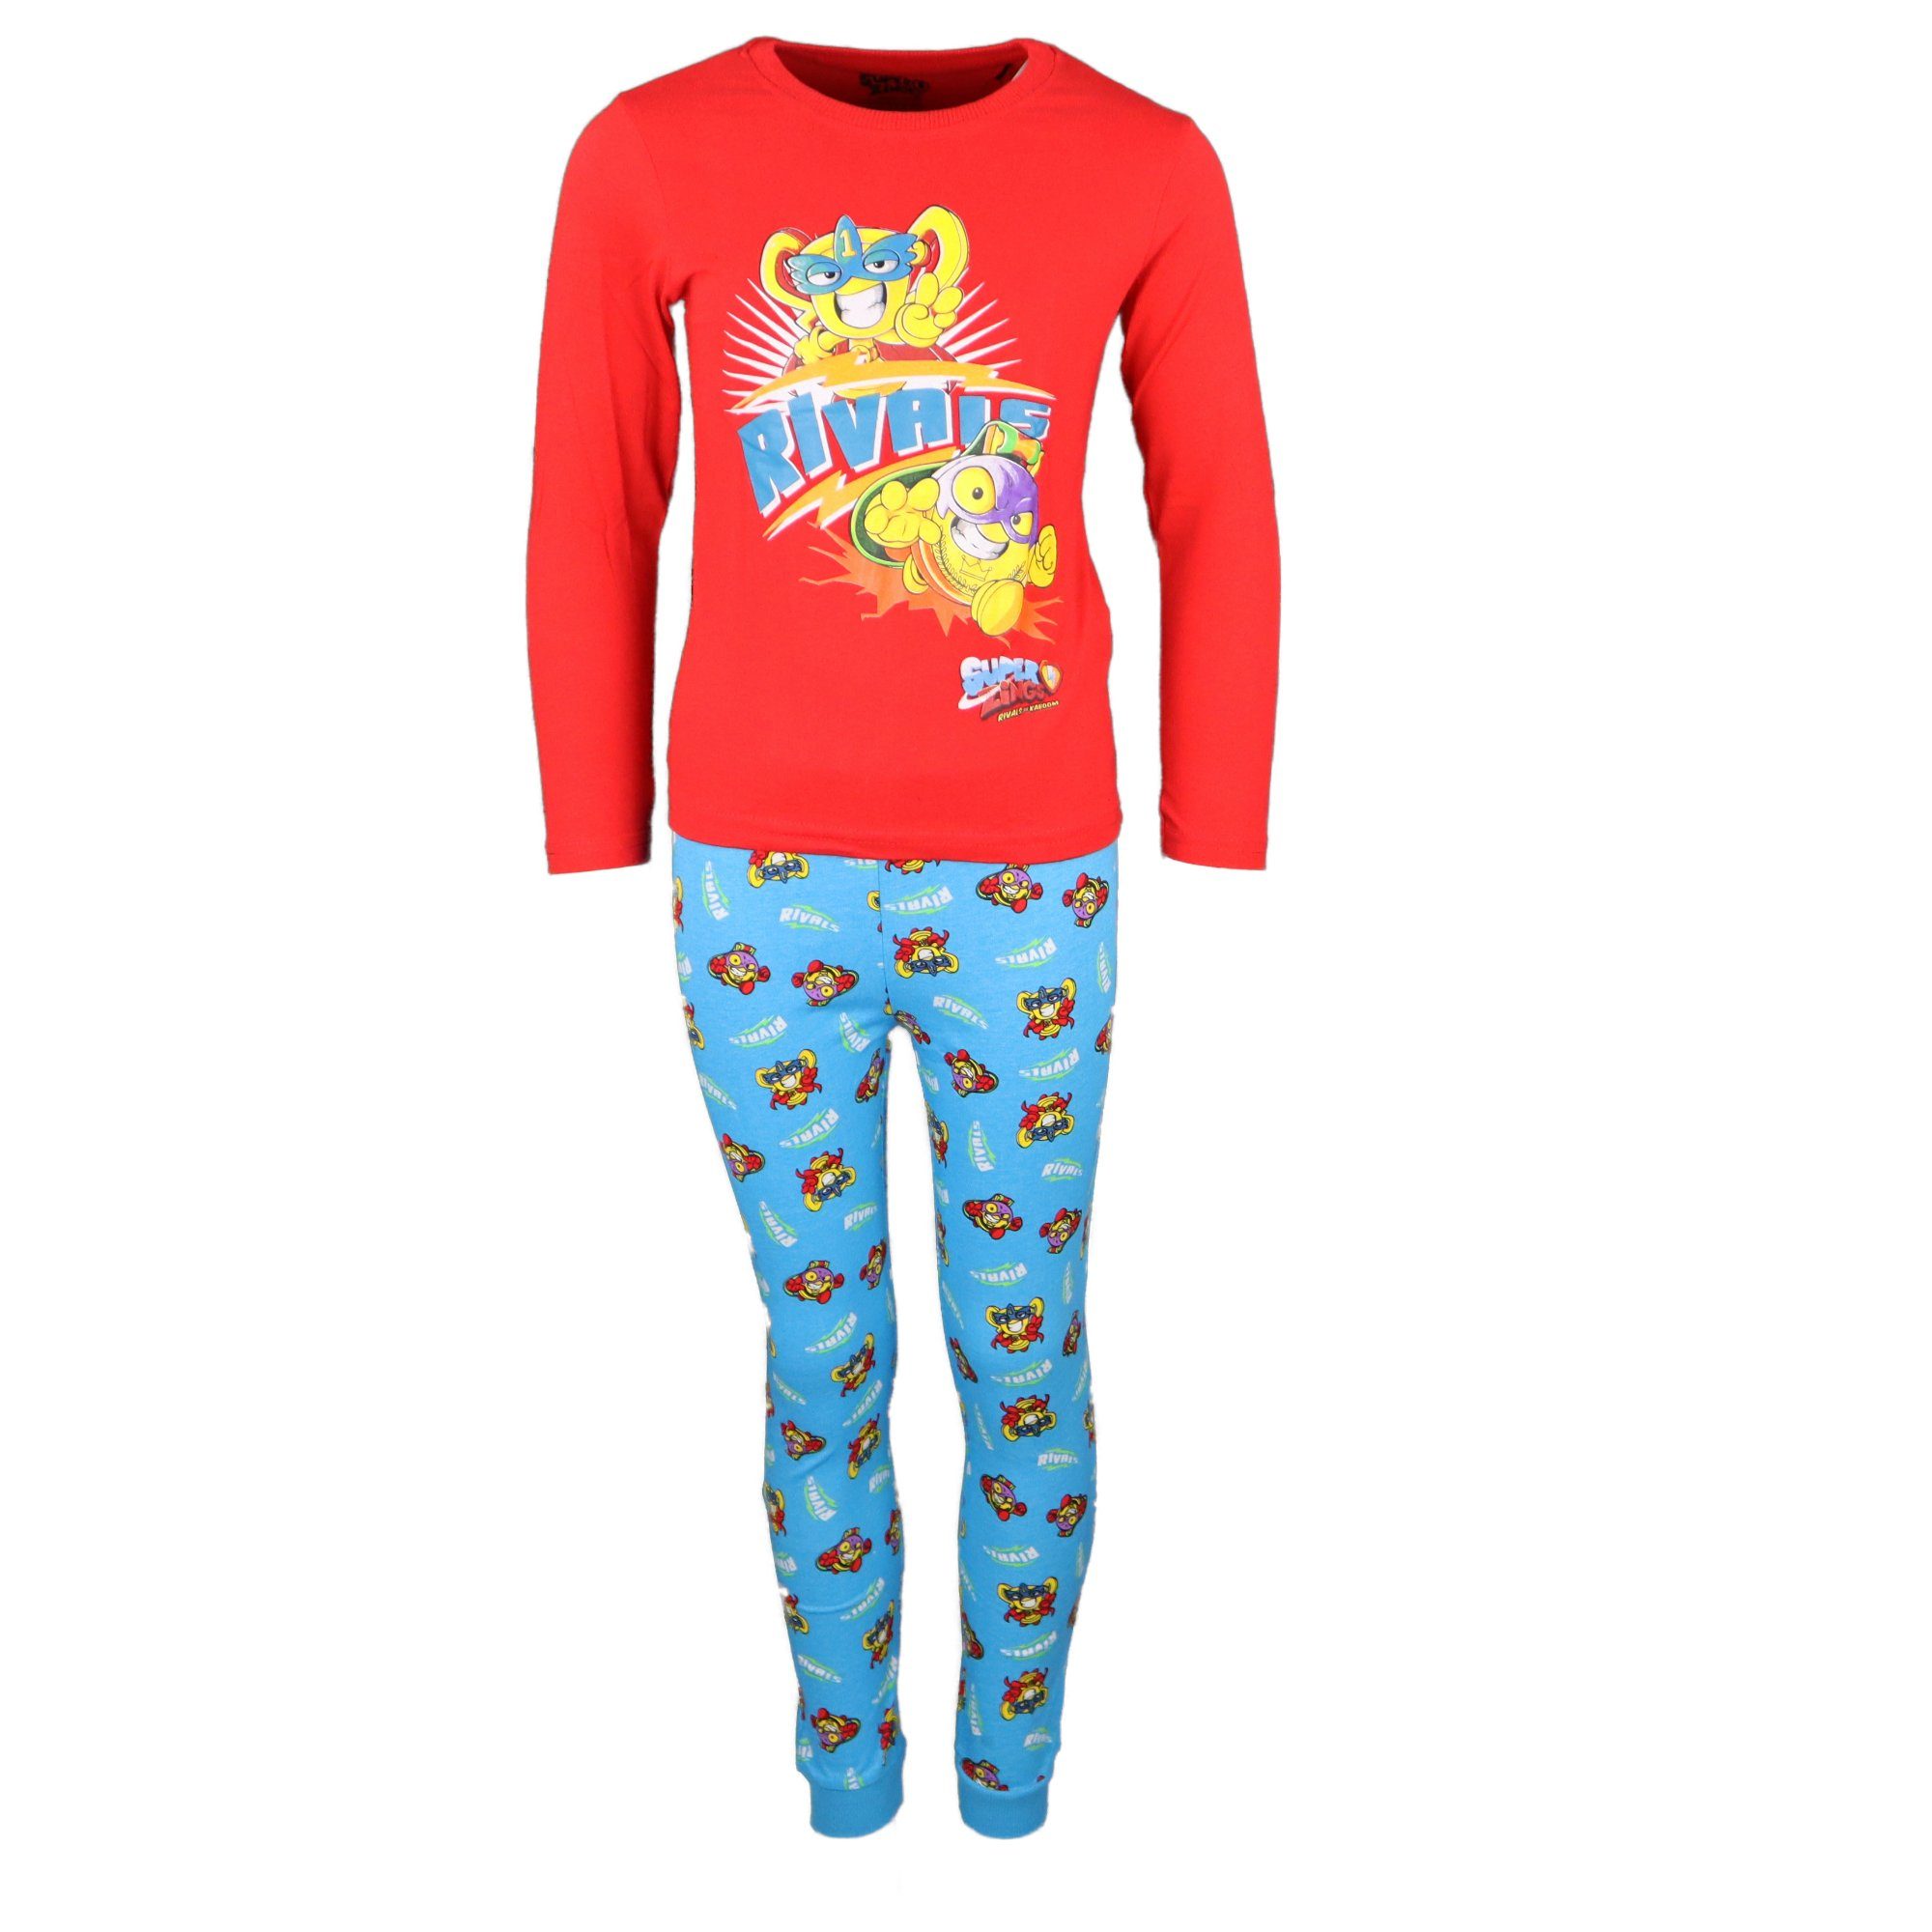 Superzings Schlafanzug Rivals Kinder Pyjama Gr. 98 bis 128, Rot oder Grau Rot/Blau